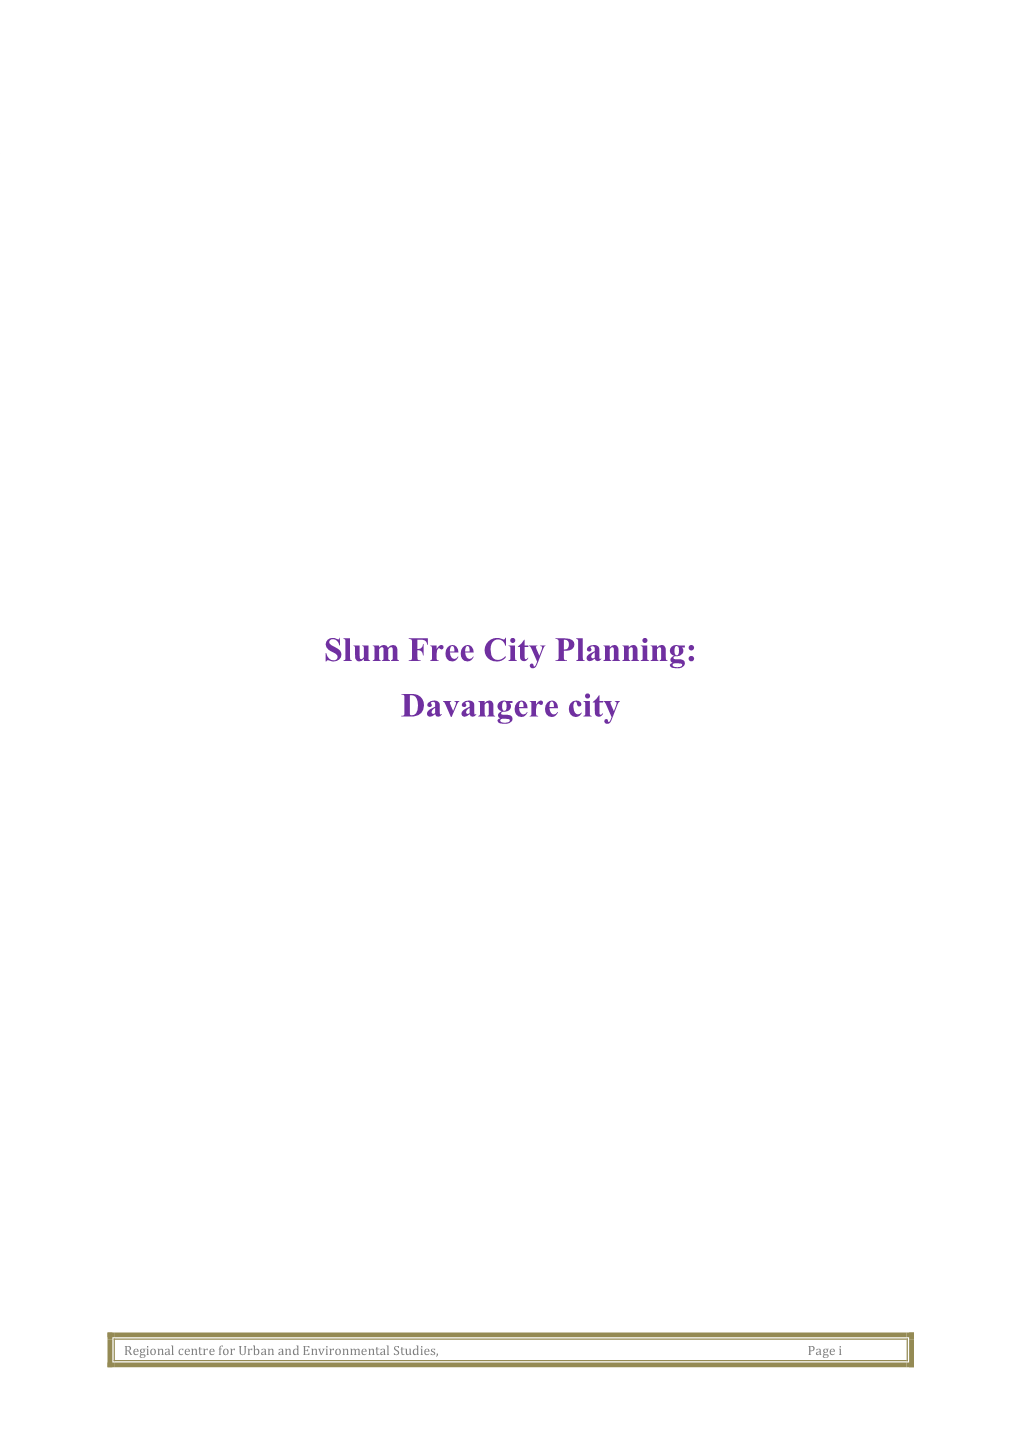 Slum Free City Planning: Davangere City